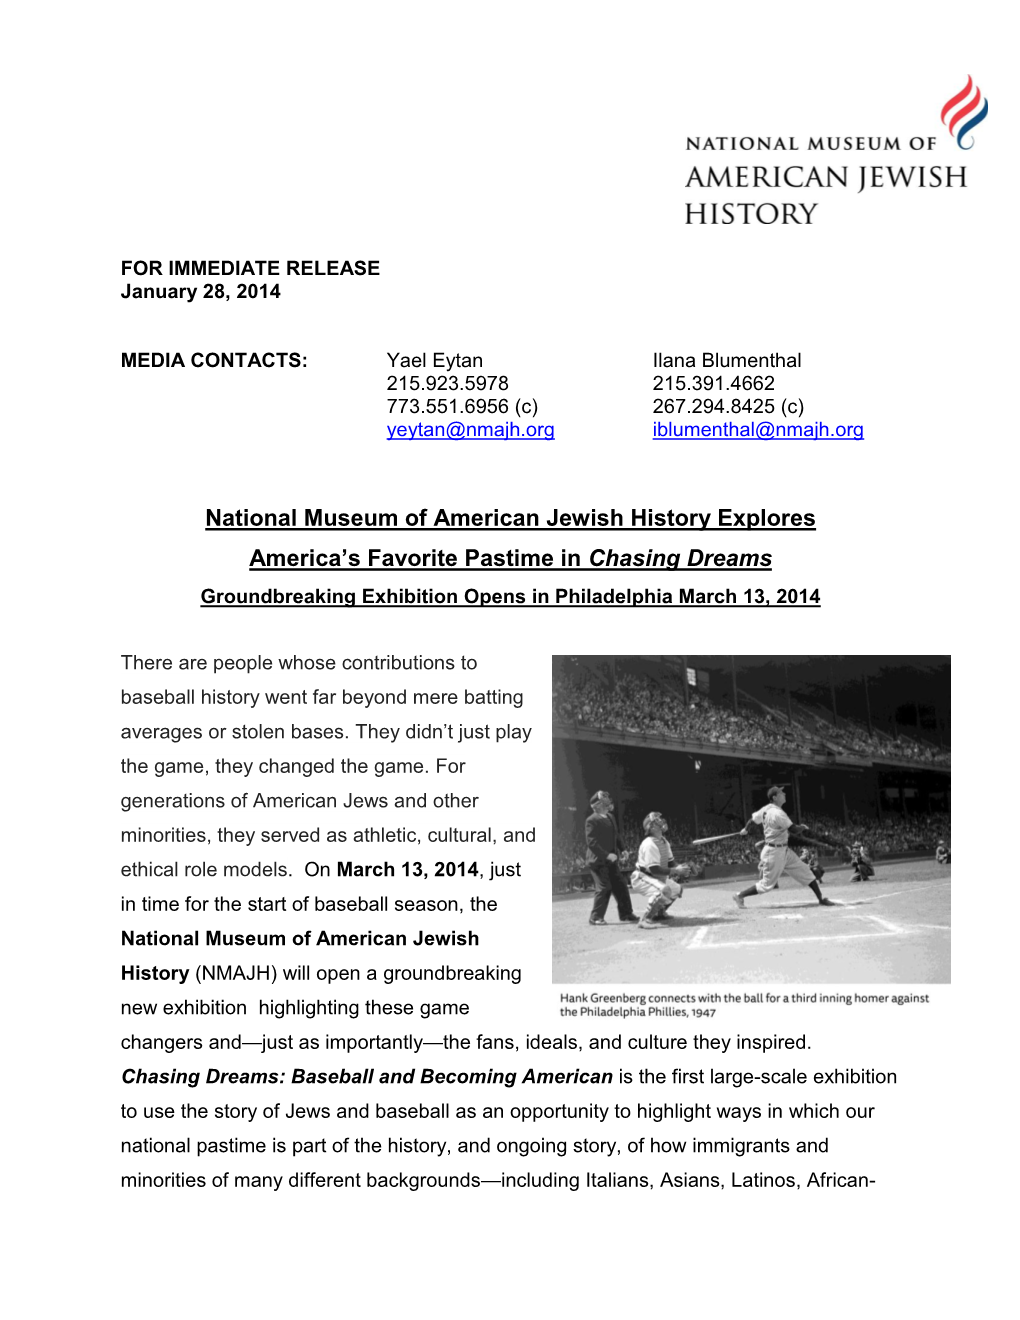 National Museum of American Jewish History Explores America's Favorite